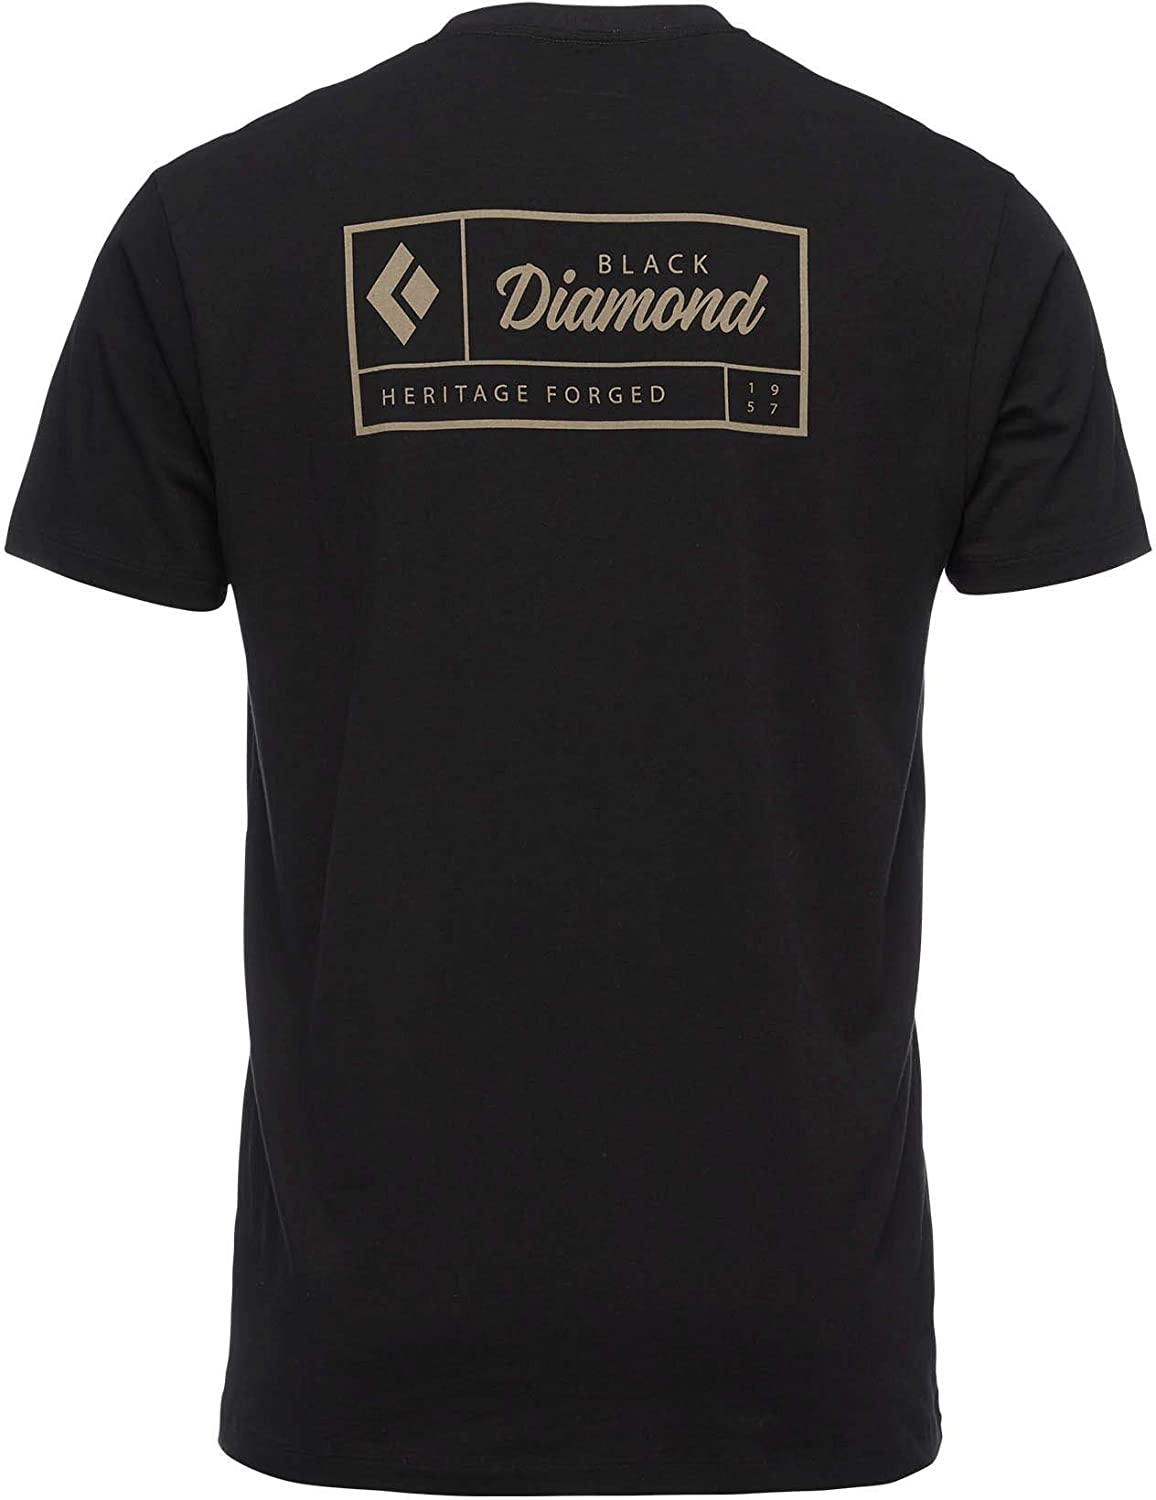 Black Diamond Shirt Herritage carbon